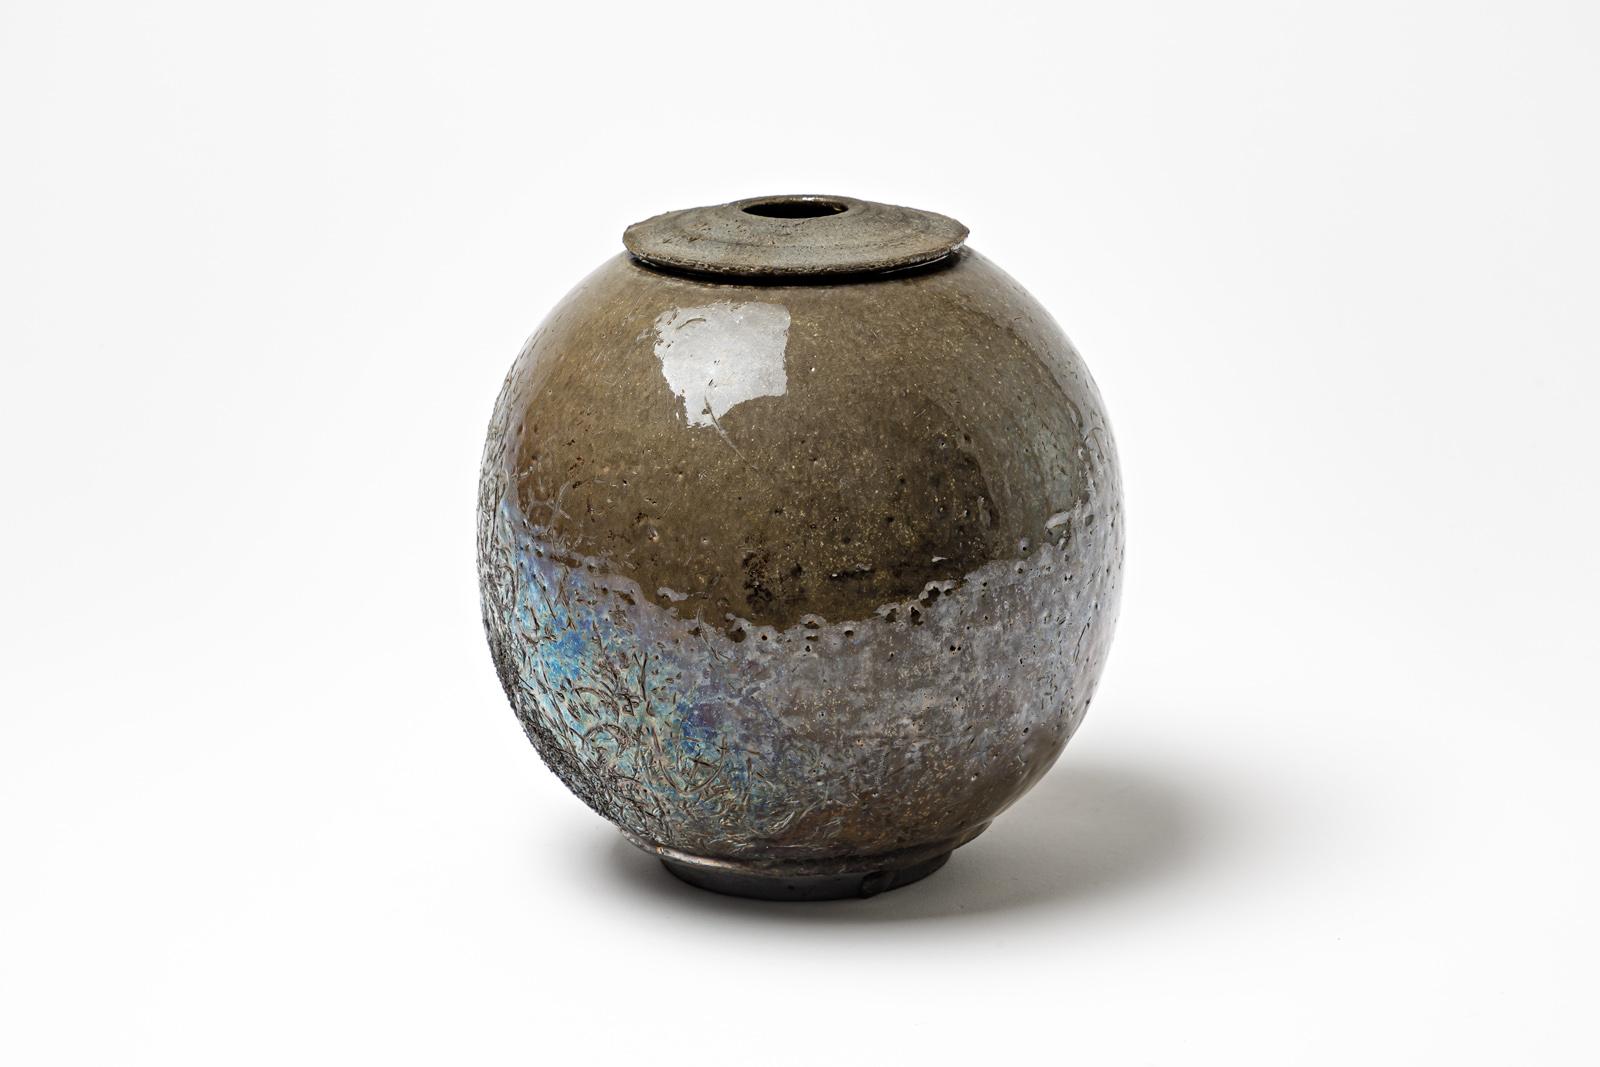 Brown glazed stoneware vase with metallic highlights by Gisèle Buthod Garçon. Raku fired. Artist monogram under the base. Circa 1980-1990.
H : 7.5’ x 6.7’ inches.